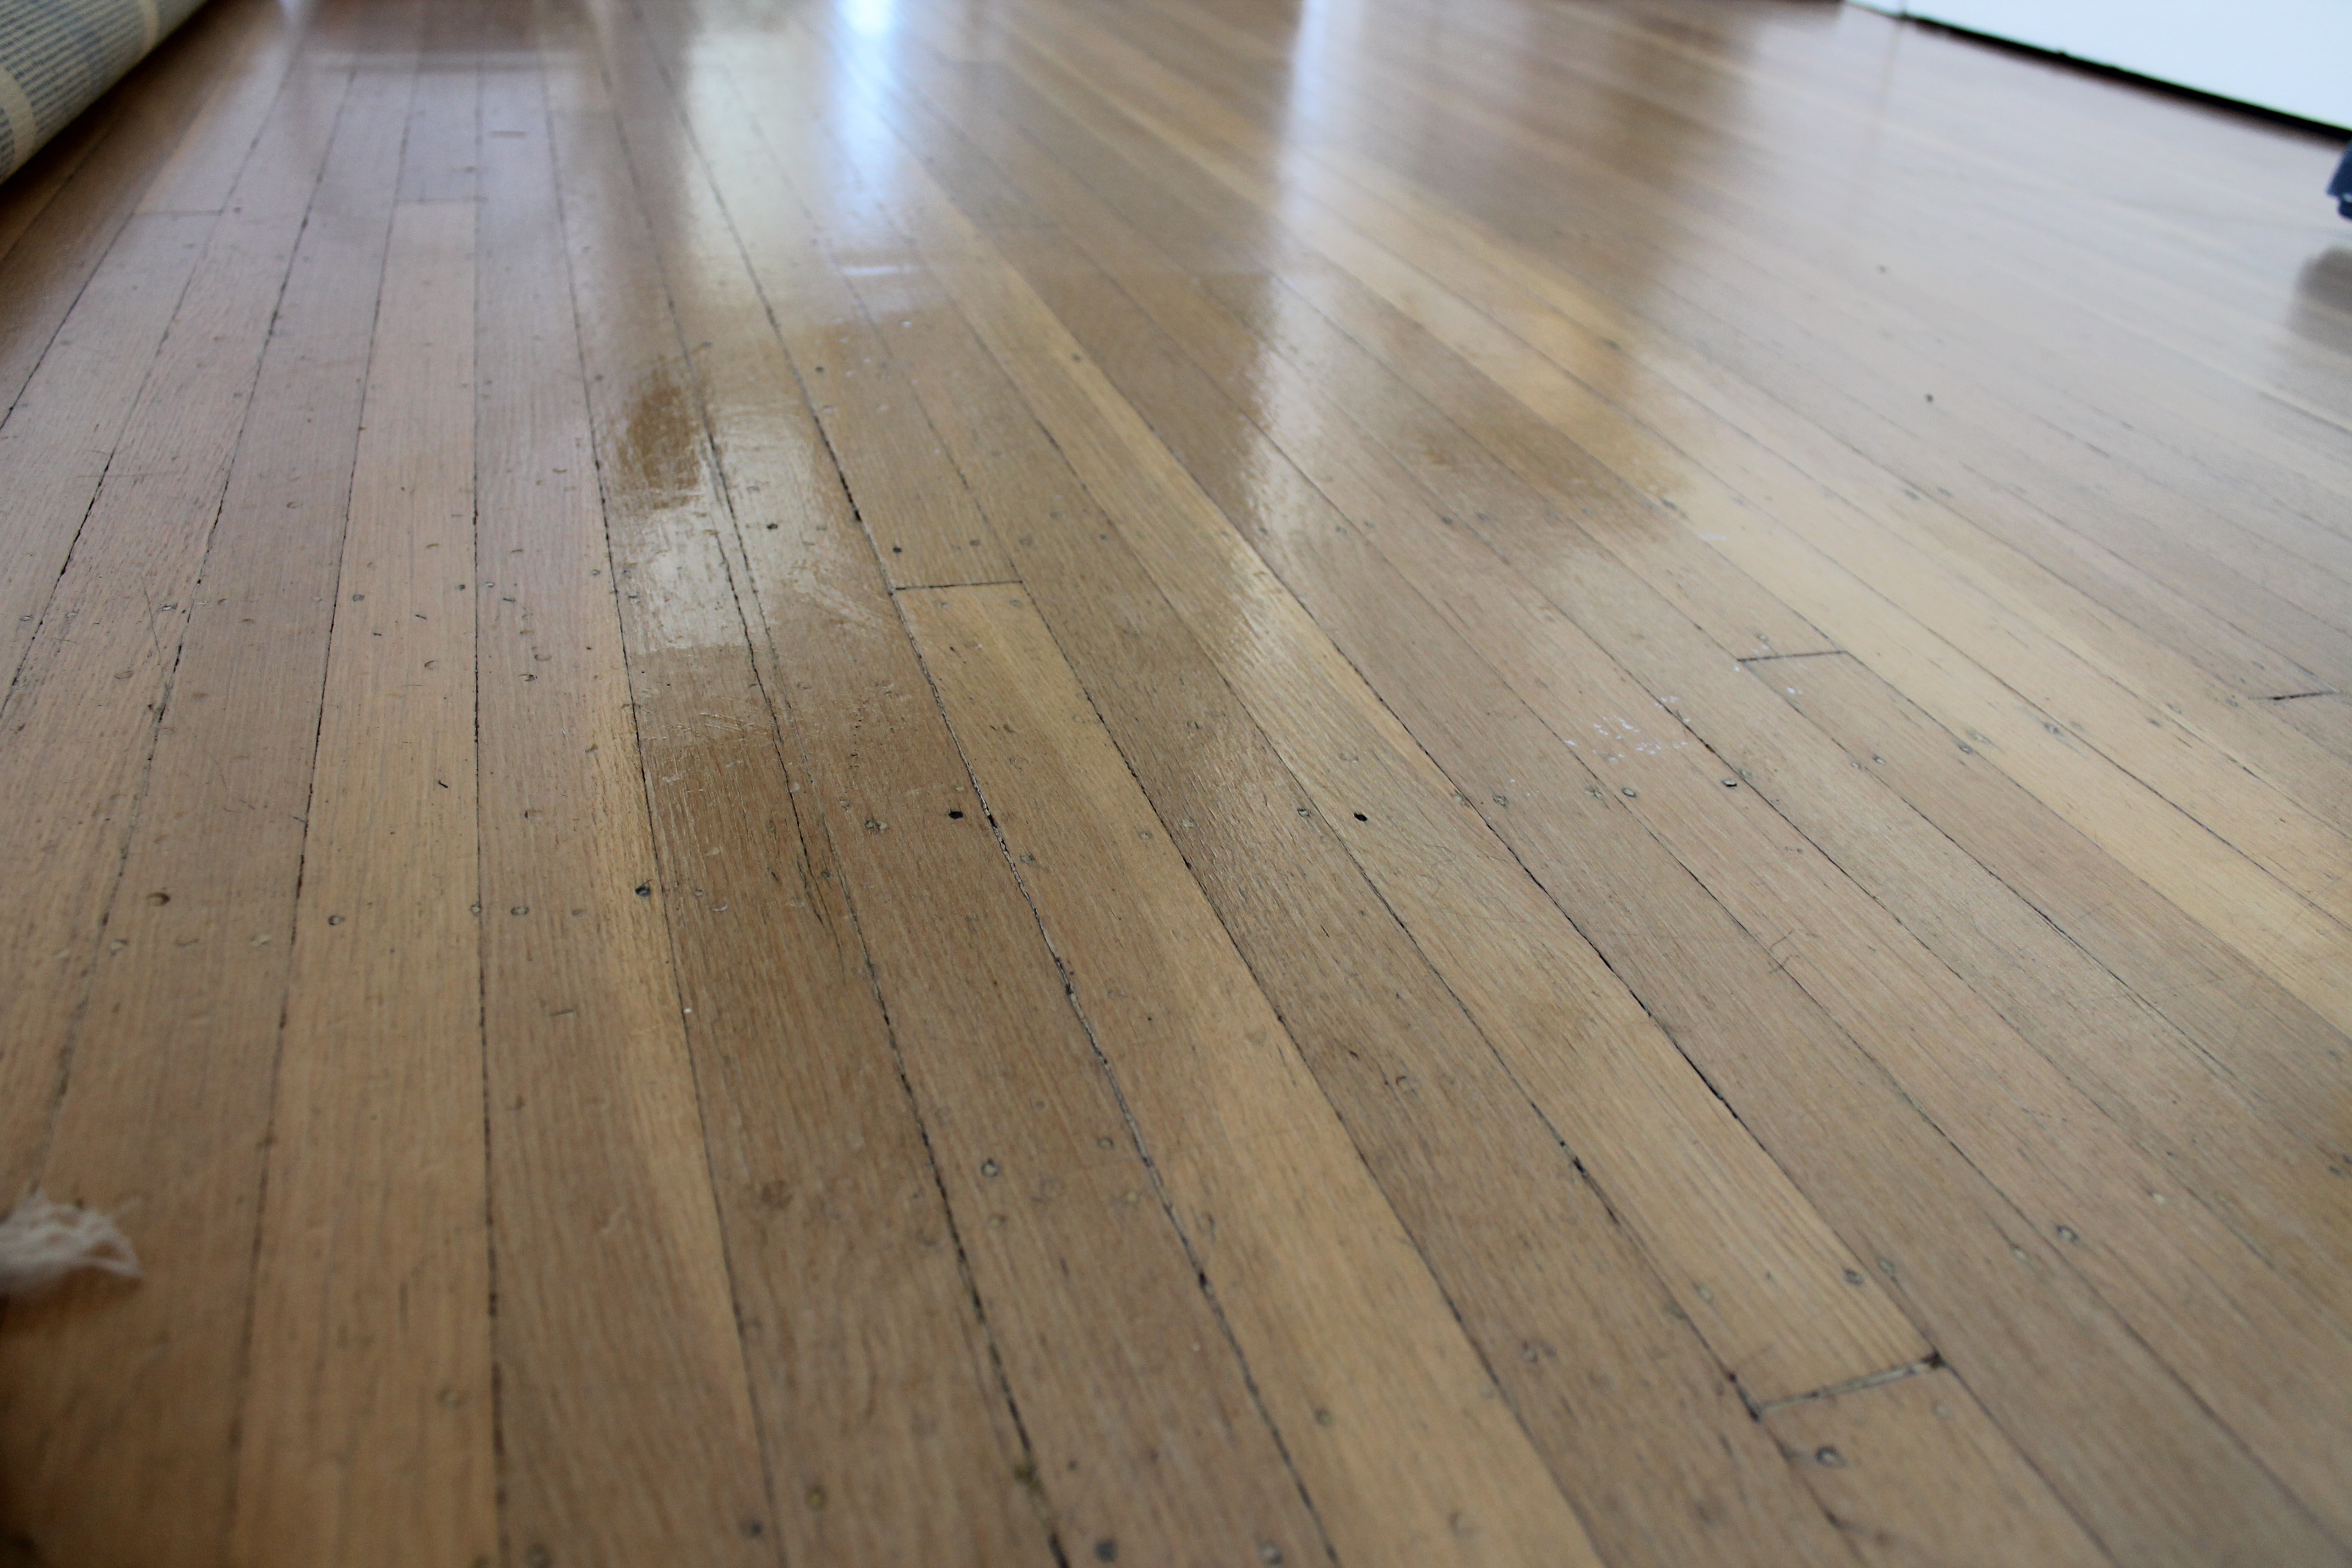 Best ideas about DIY Hardwood Flooring
. Save or Pin DIY Wood Floor Polish Now.